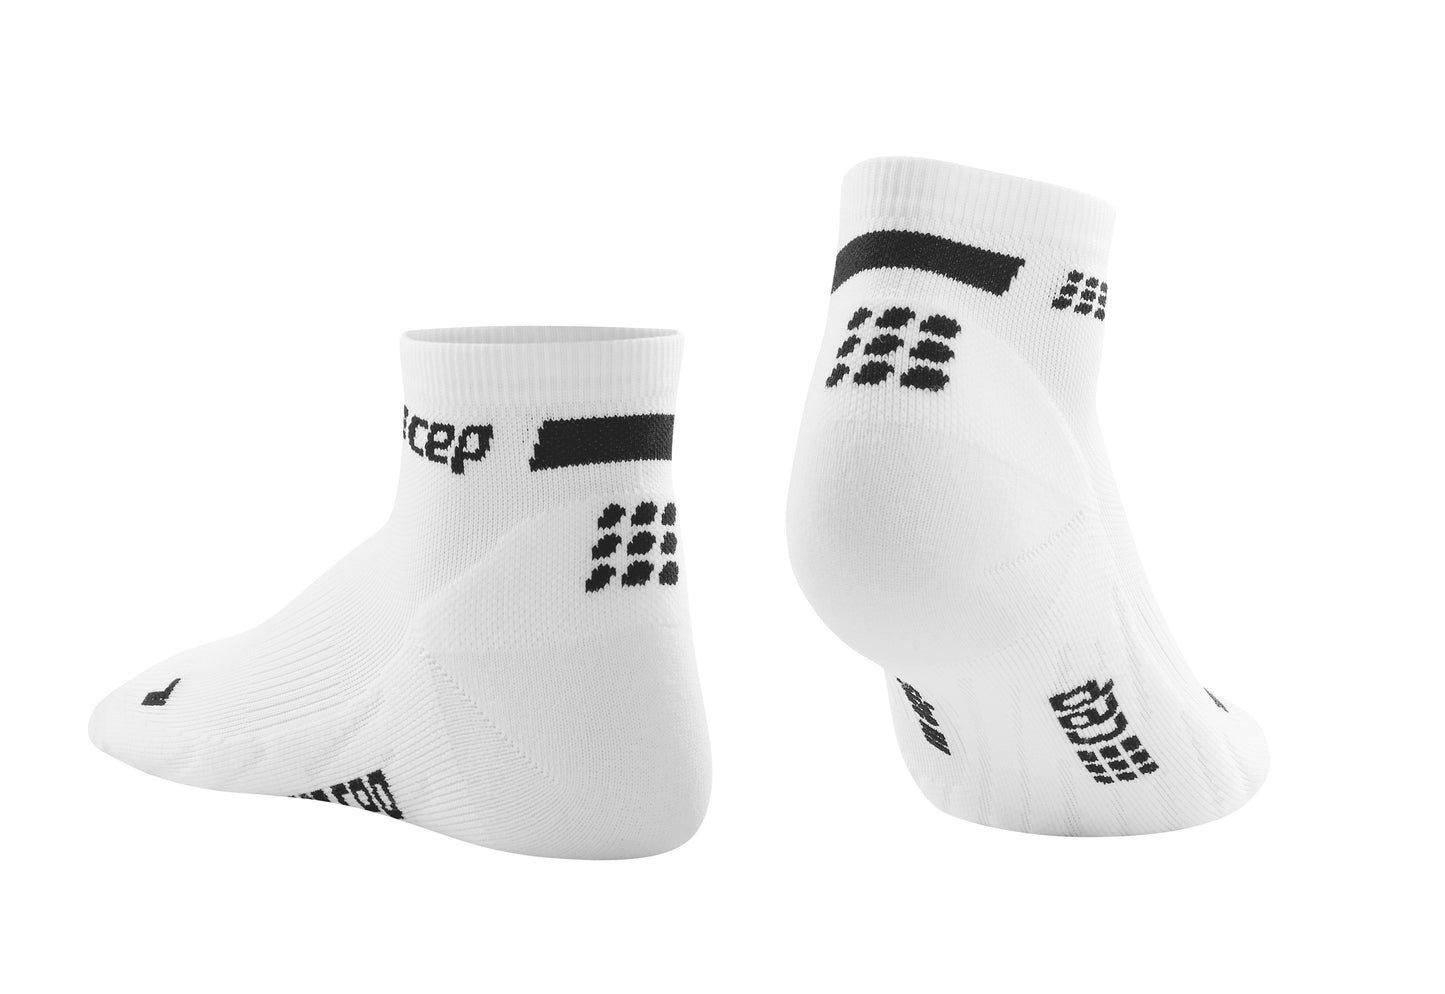 CEP Run Compression Socks Men's Low Cut - White